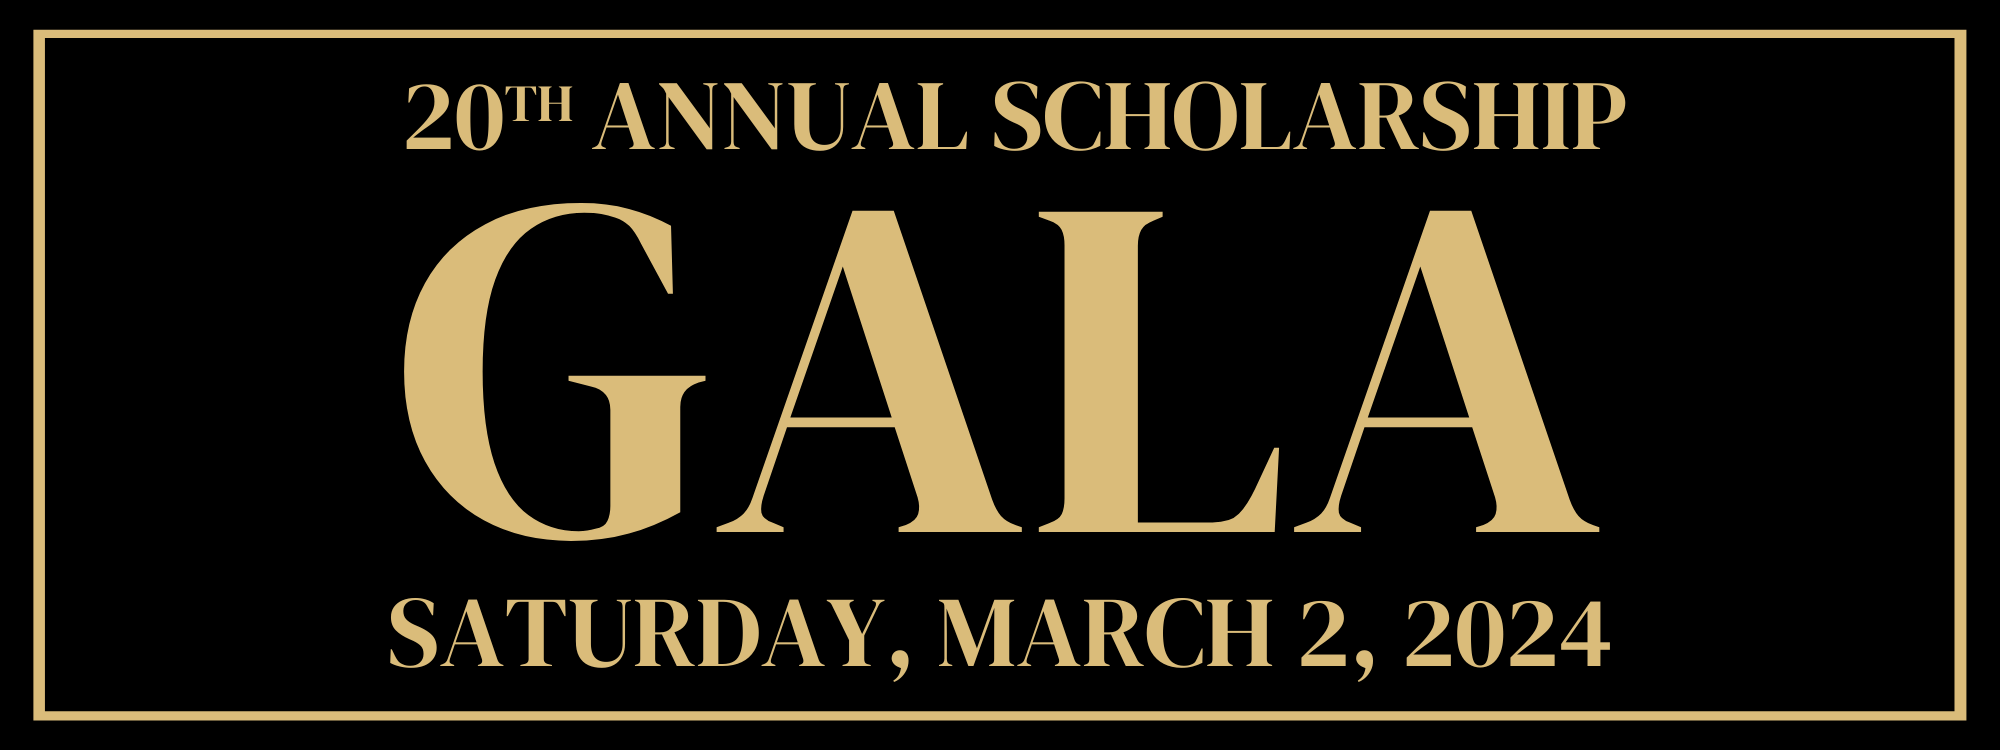 20th Annual Scholarship Gala